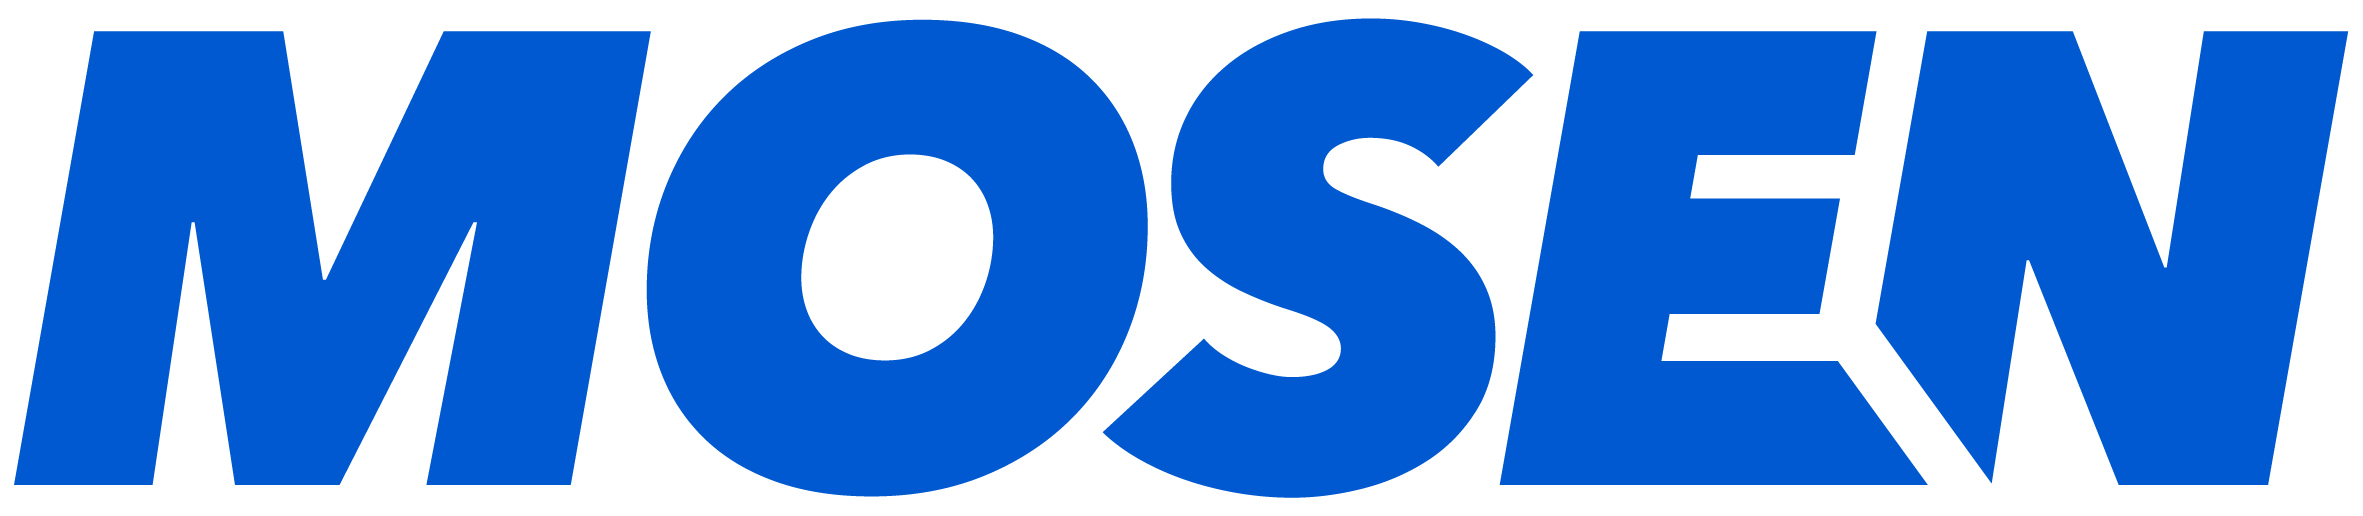 Mosen Logo Colour Large-01